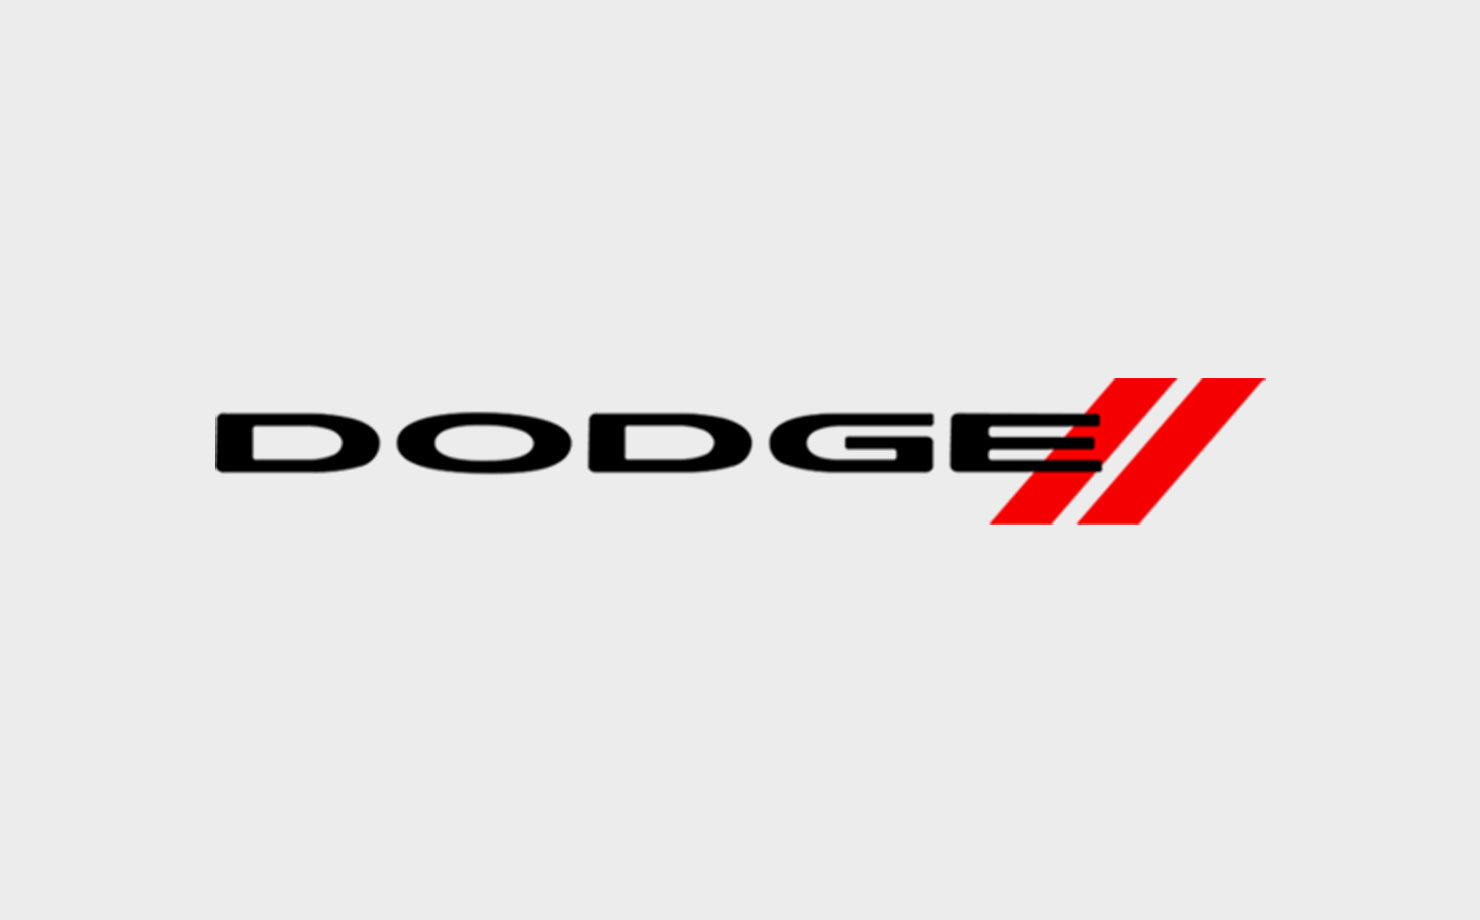 Immagine logo Dodge